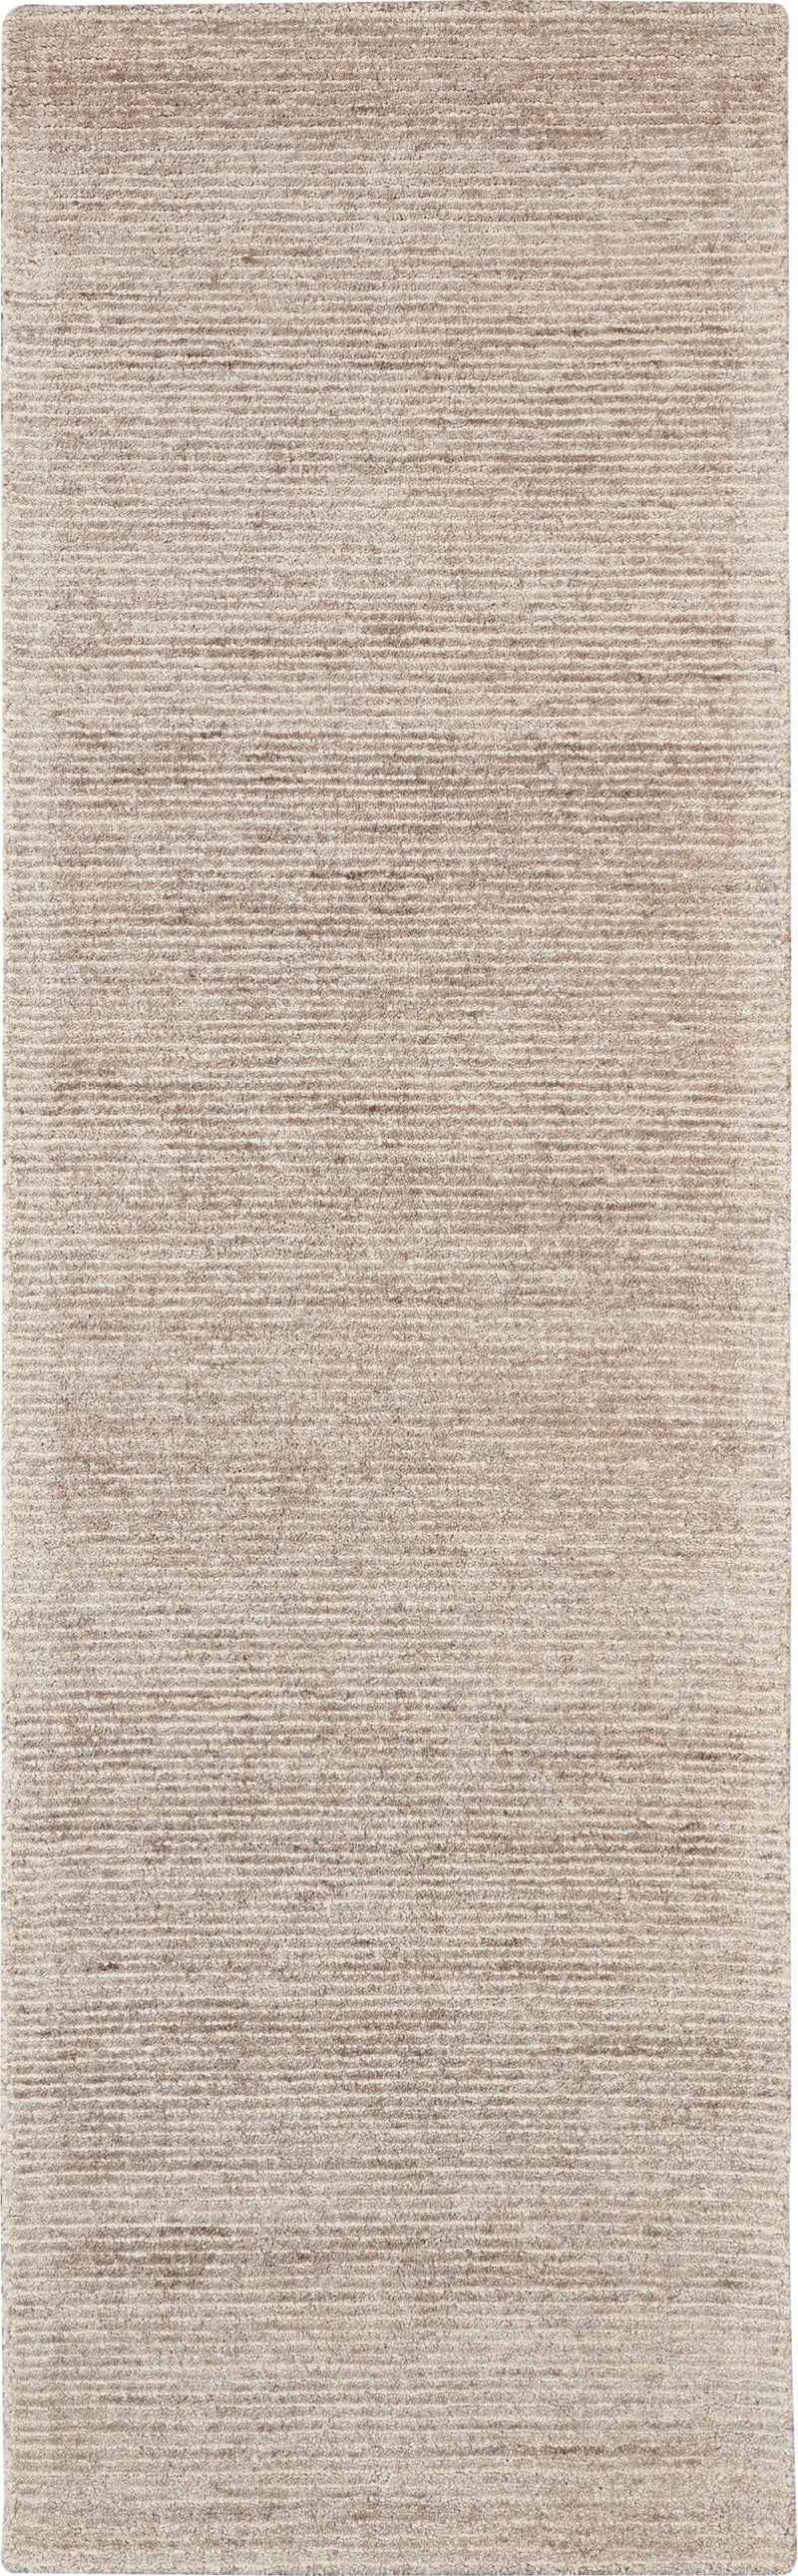 media image for weston handmade oatmeal rug by nourison 99446004642 redo 2 276